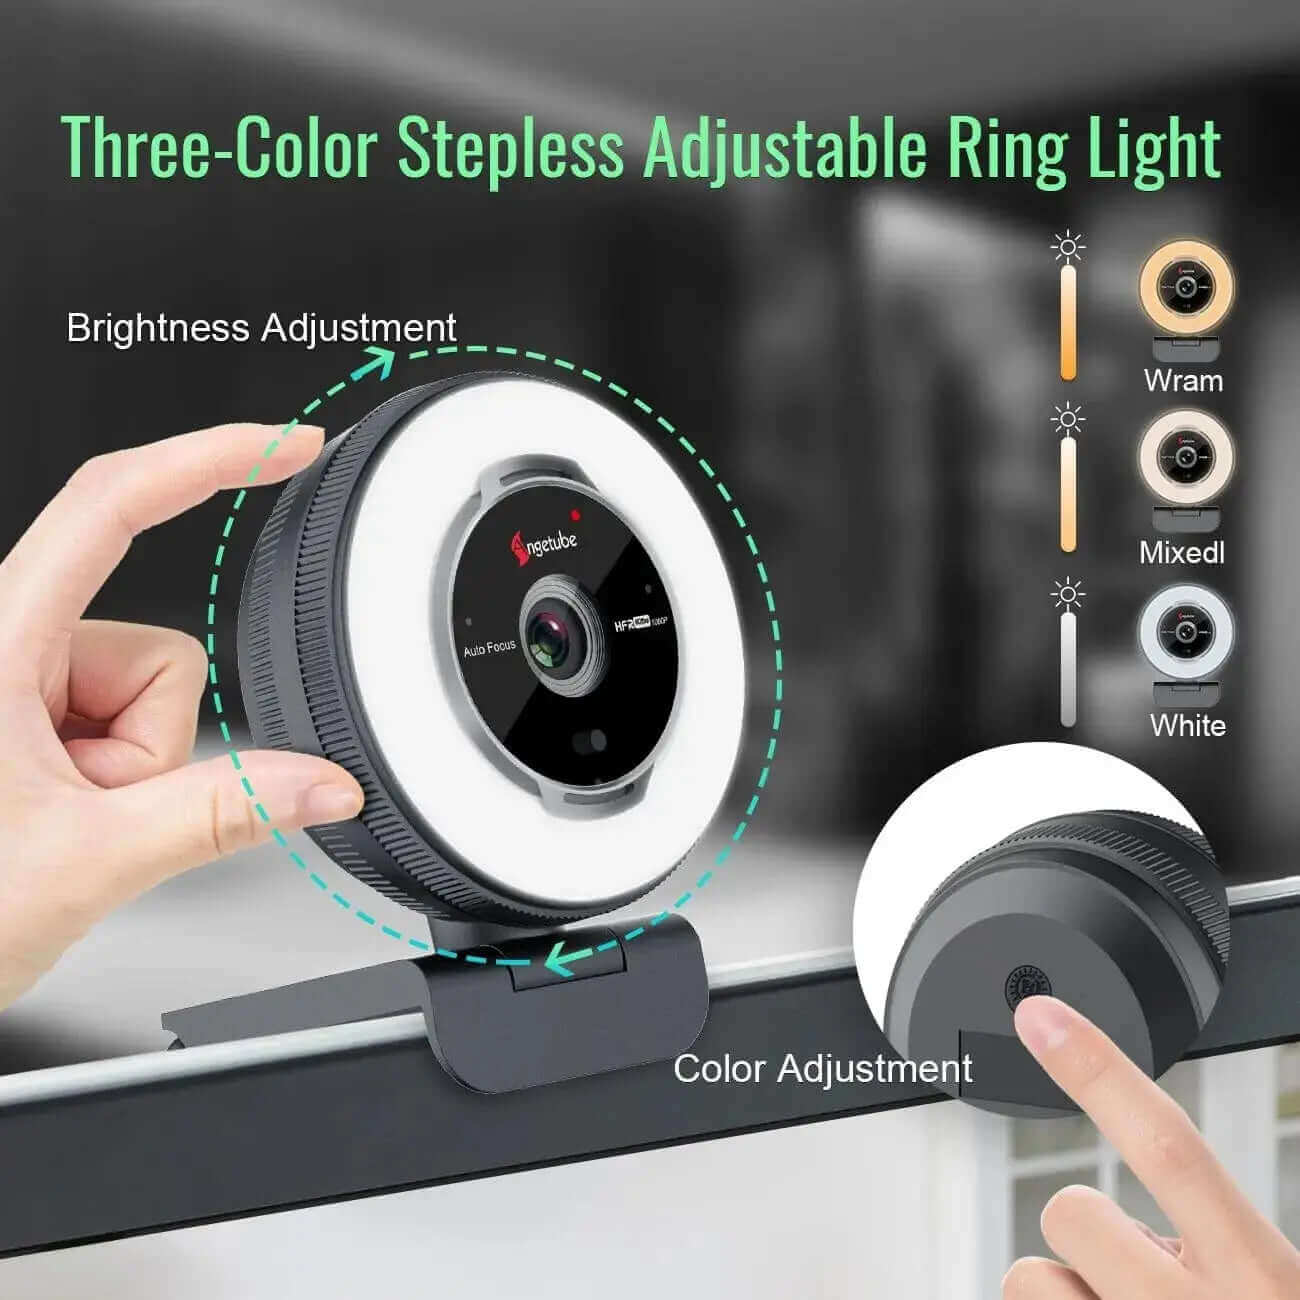 Three-Color Stepless Adjustable Ring Light